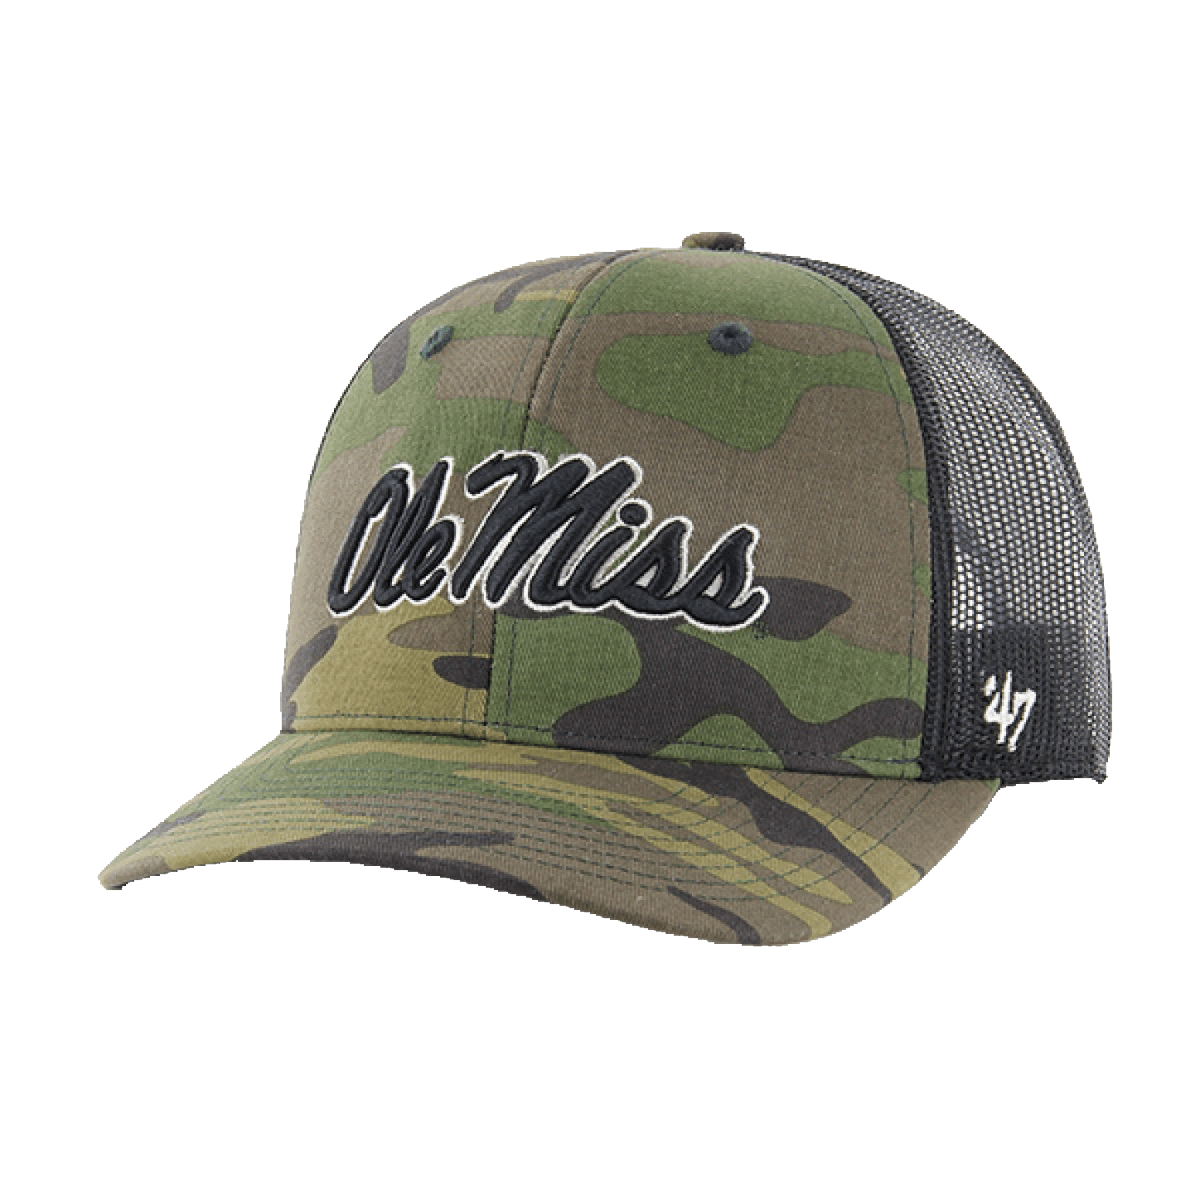 University of Mississippi 47 Brand Trucker Hat - Shop B-Unlimited